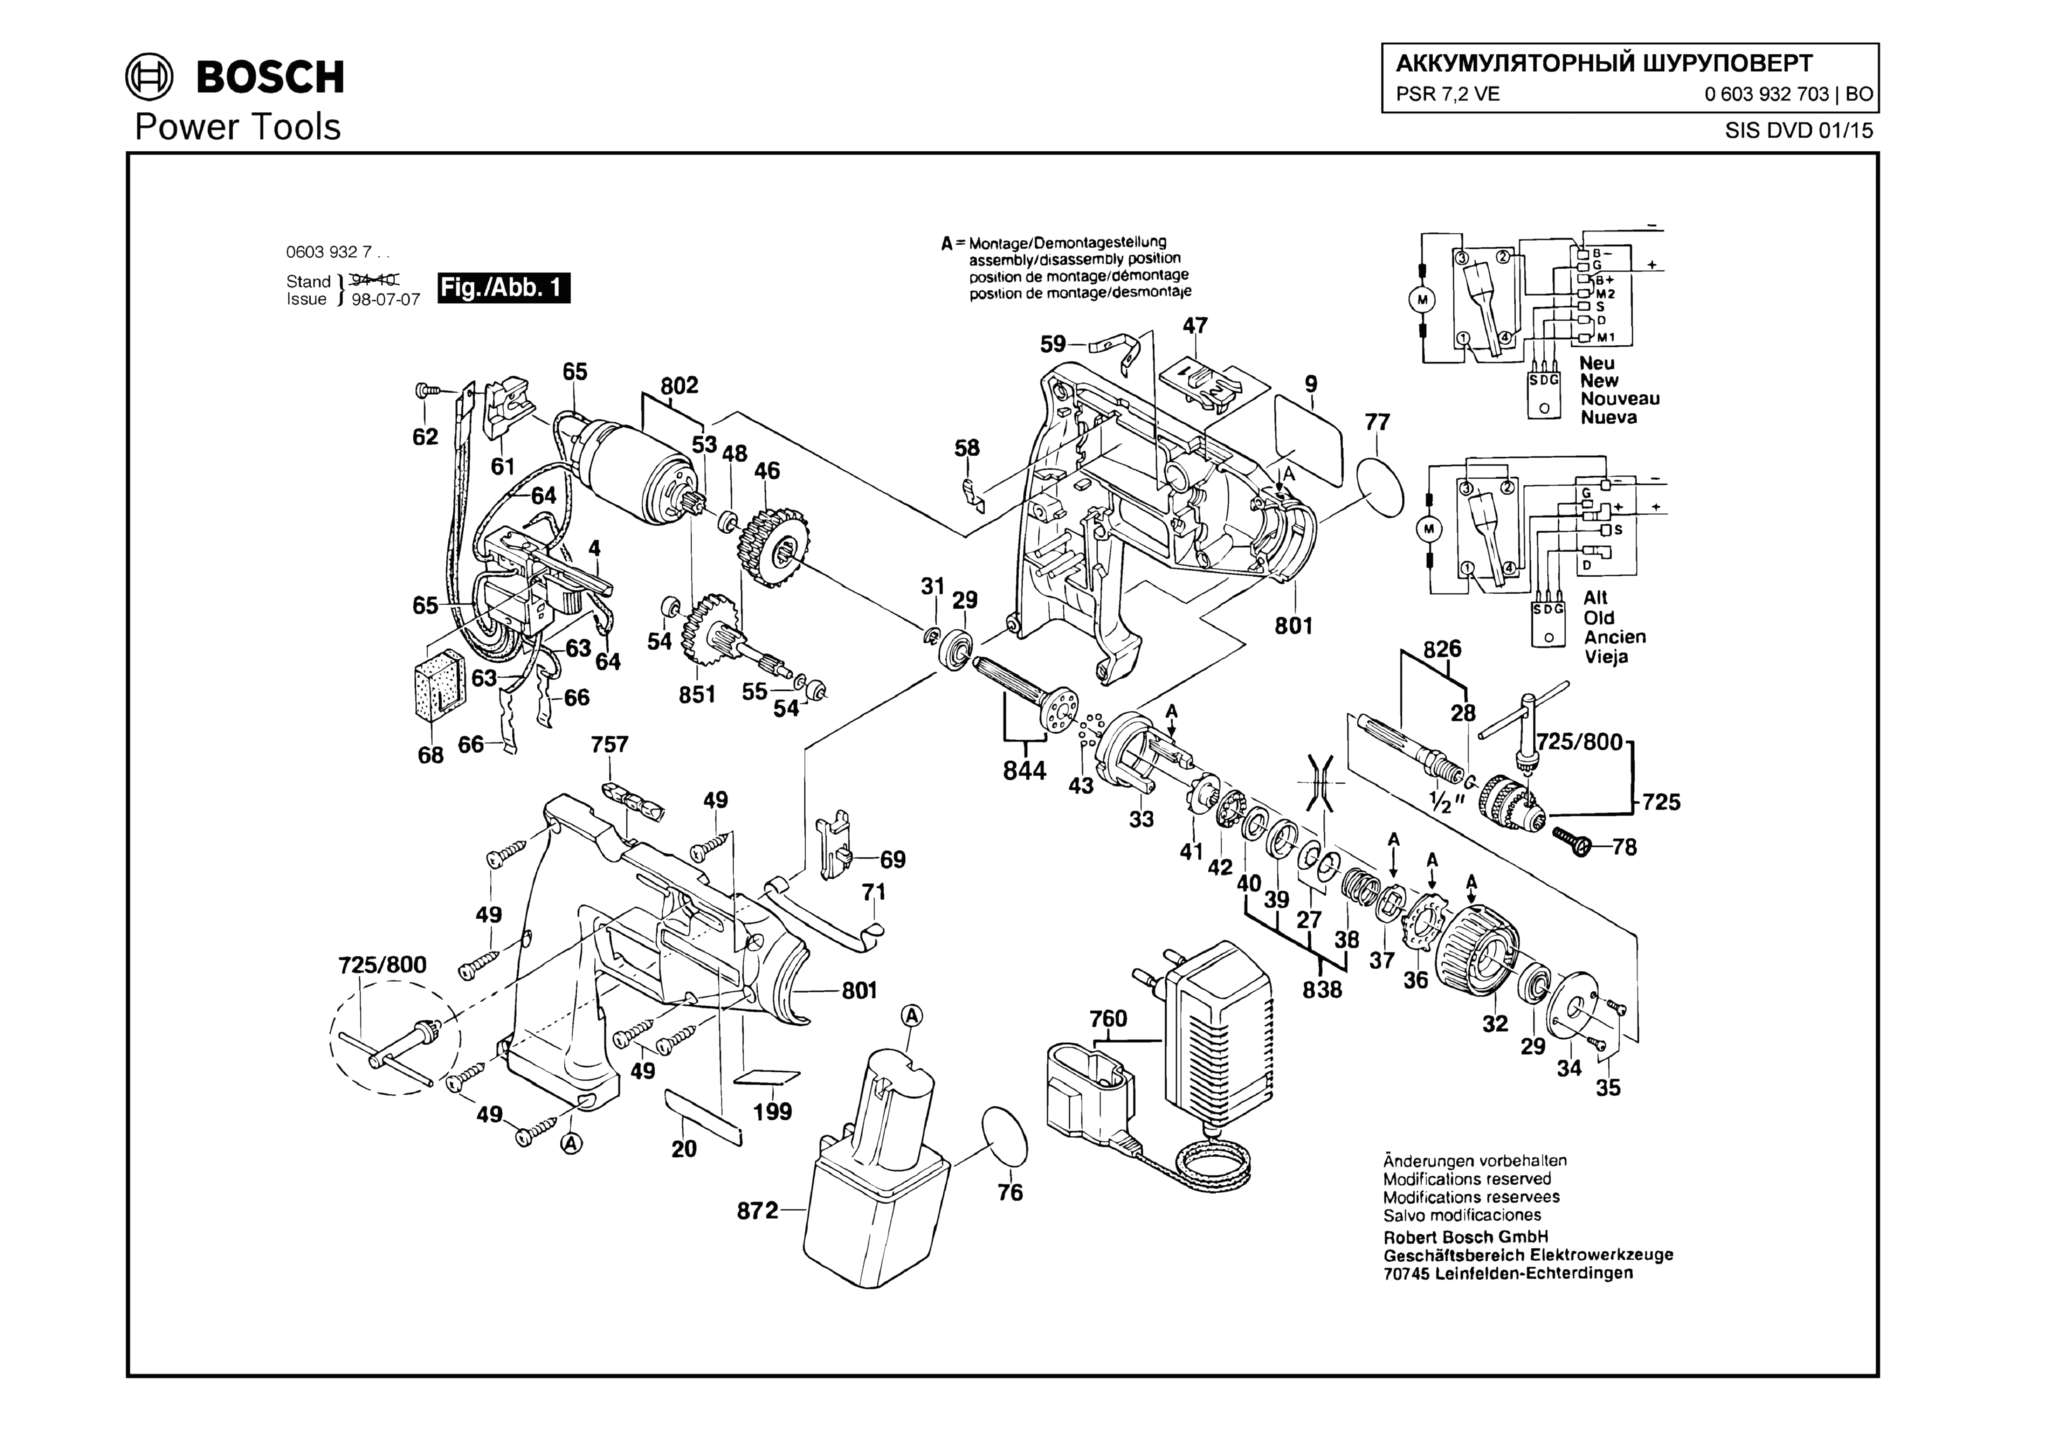 Запчасти, схема и деталировка Bosch PSR 7,2 VE (ТИП 0603932703)